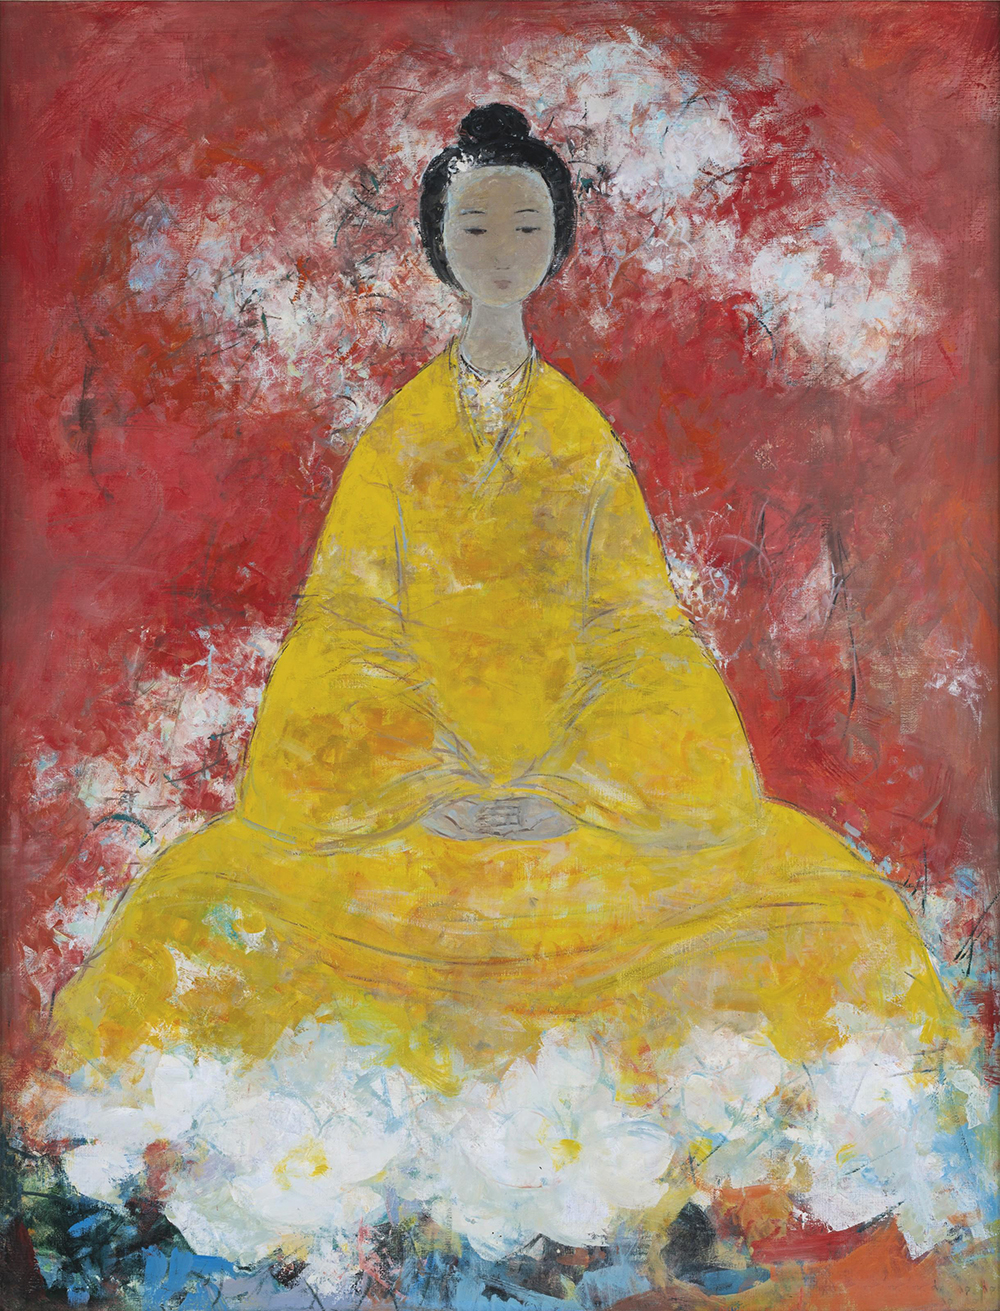 Buddhist Buddha painting on canvas BUD0154